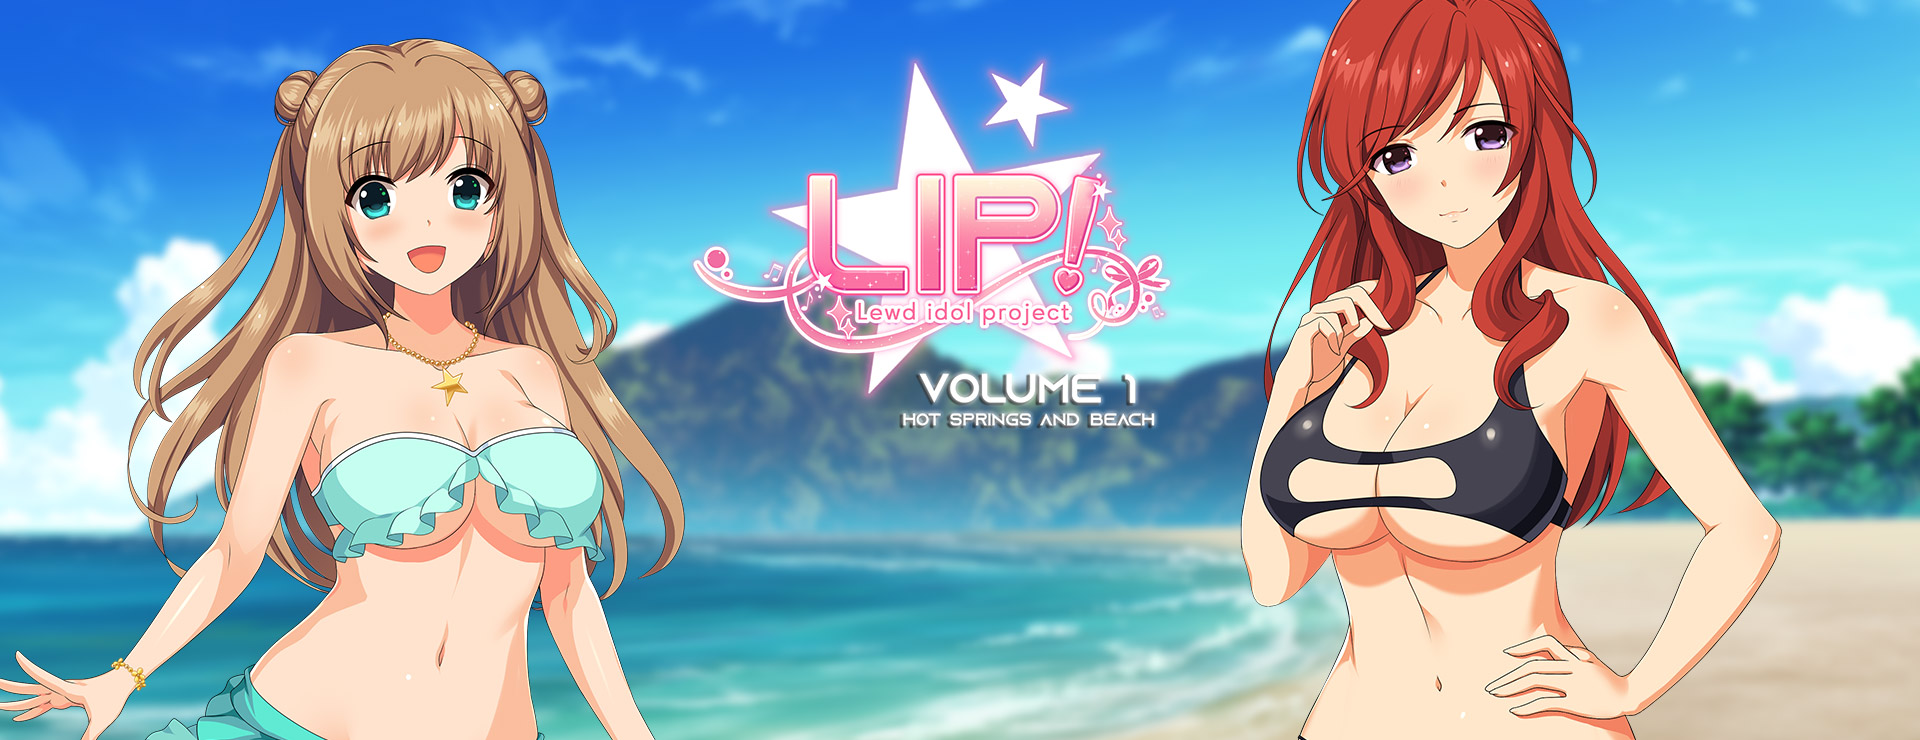 LIP! Lewd Idol Project Vol. 1 - Hot Springs and Beach Episodes - Novela Visual Juego